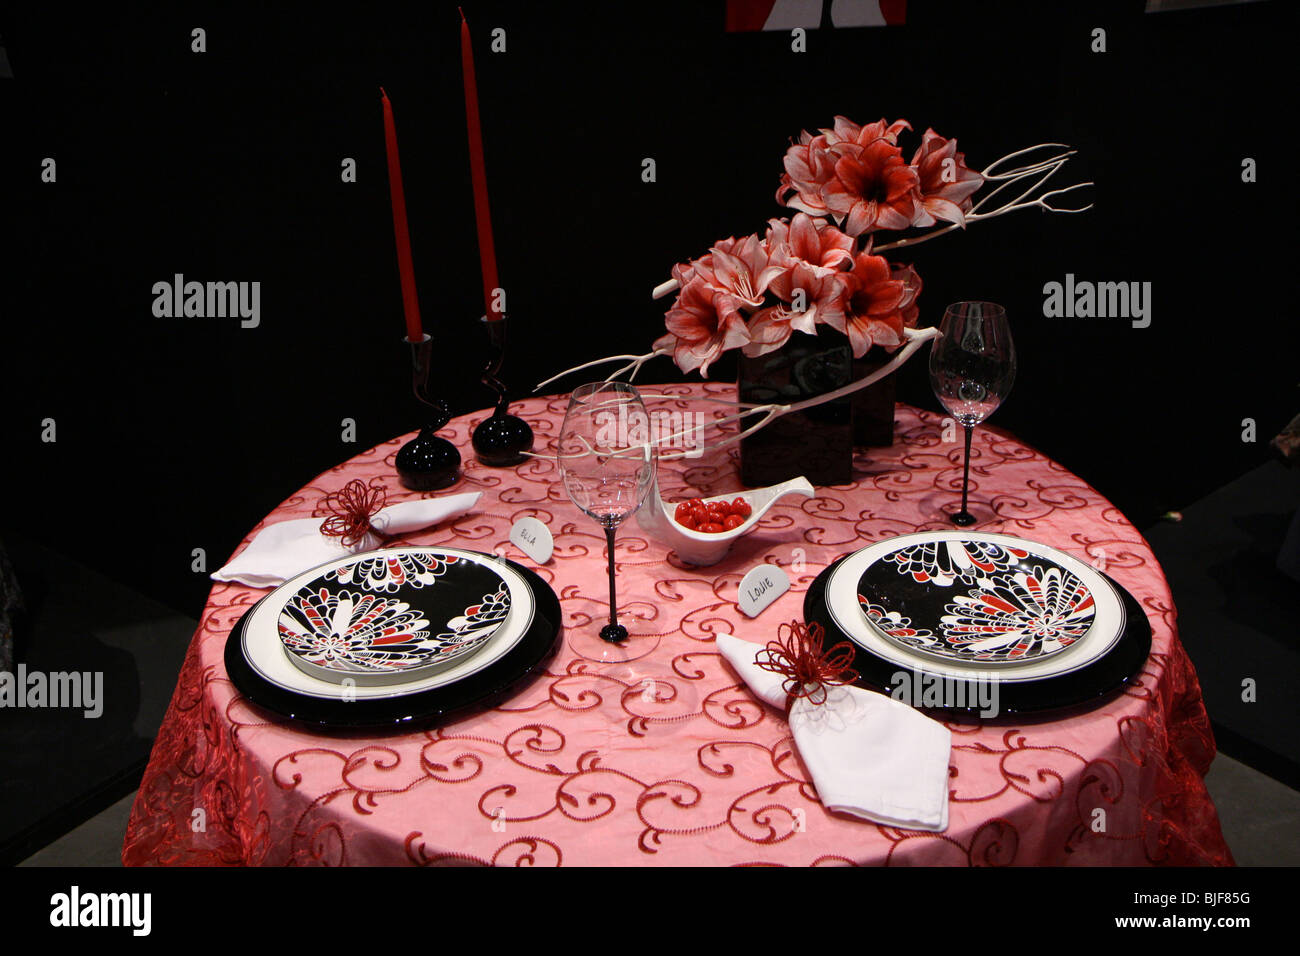 elegance luxury candle silverware napkin plate glass dinner rose vase decoration black dark red bright flower table set Stock Photo